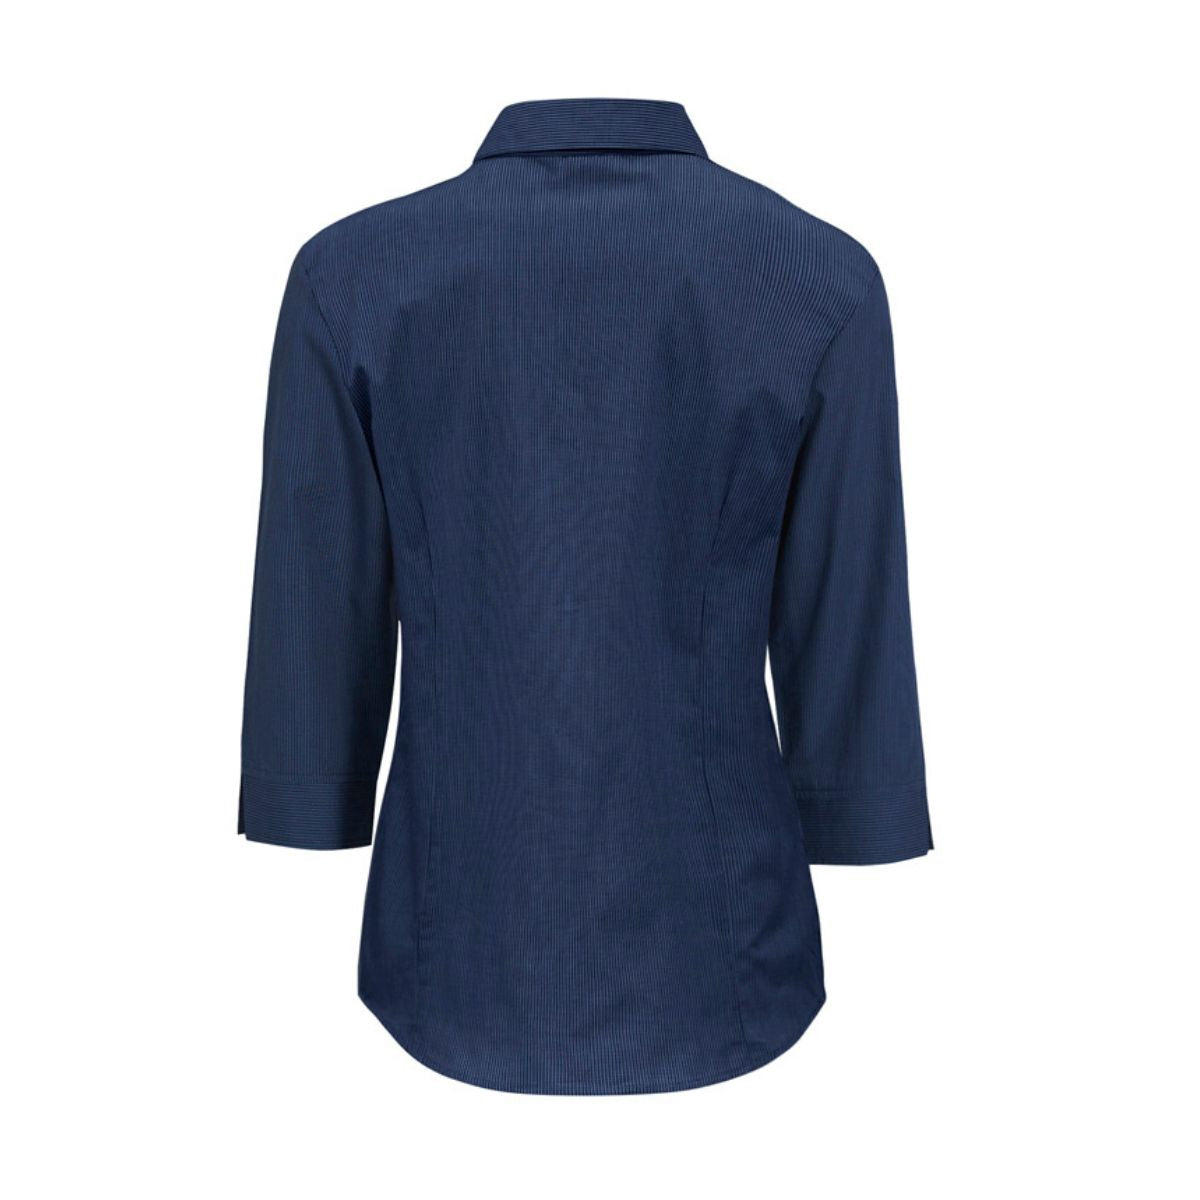 Biz Collection Women's Micro Check 3/4 Sleeve Shirt LB8200